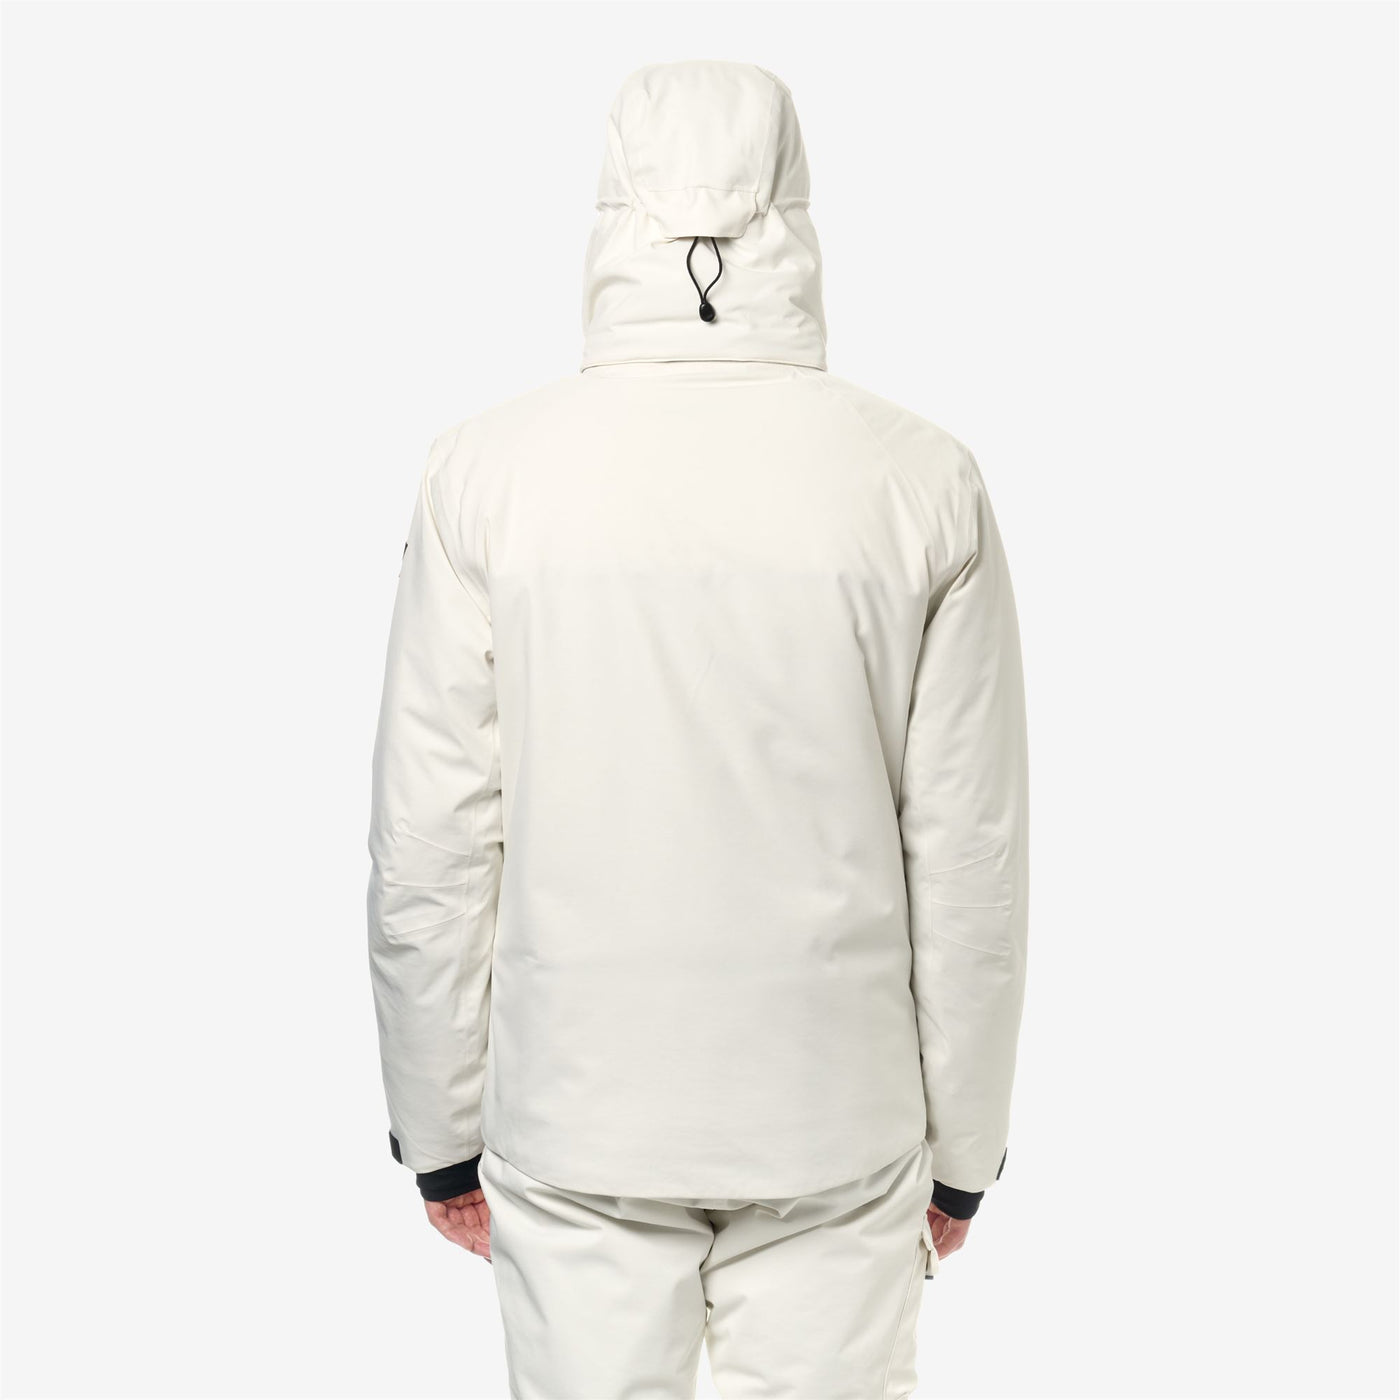 Jackets Man MALAMOT MICRO TWILL 2 LAYERS Mid WHITE GARDENIA Dressed Front Double		